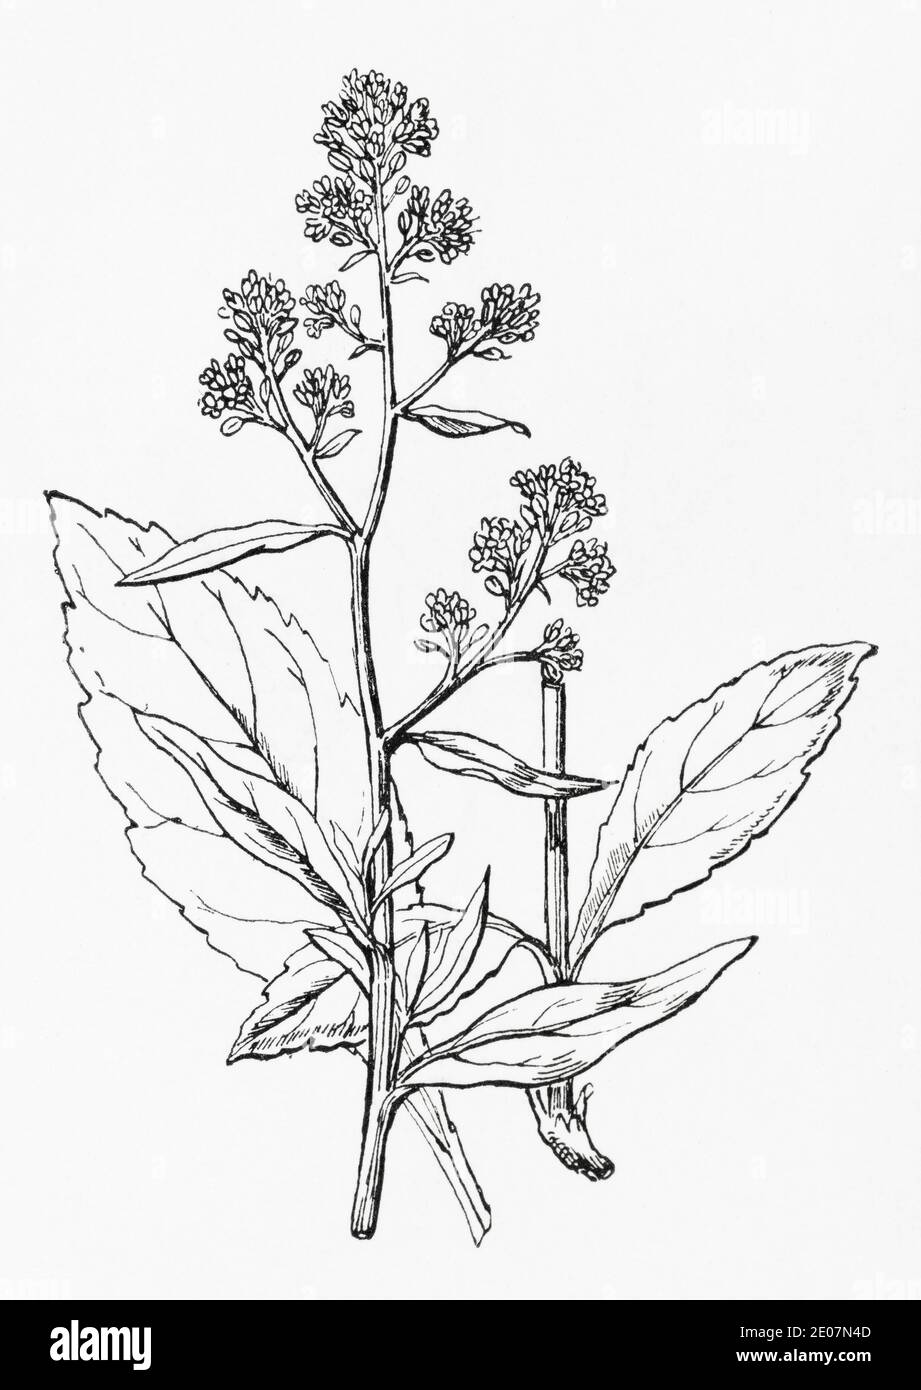 Old botanical illustration engraving of Pepperwort, Dittander / Lepidium latifolium. Traditional medicinal herbal plant. See Notes Stock Photo